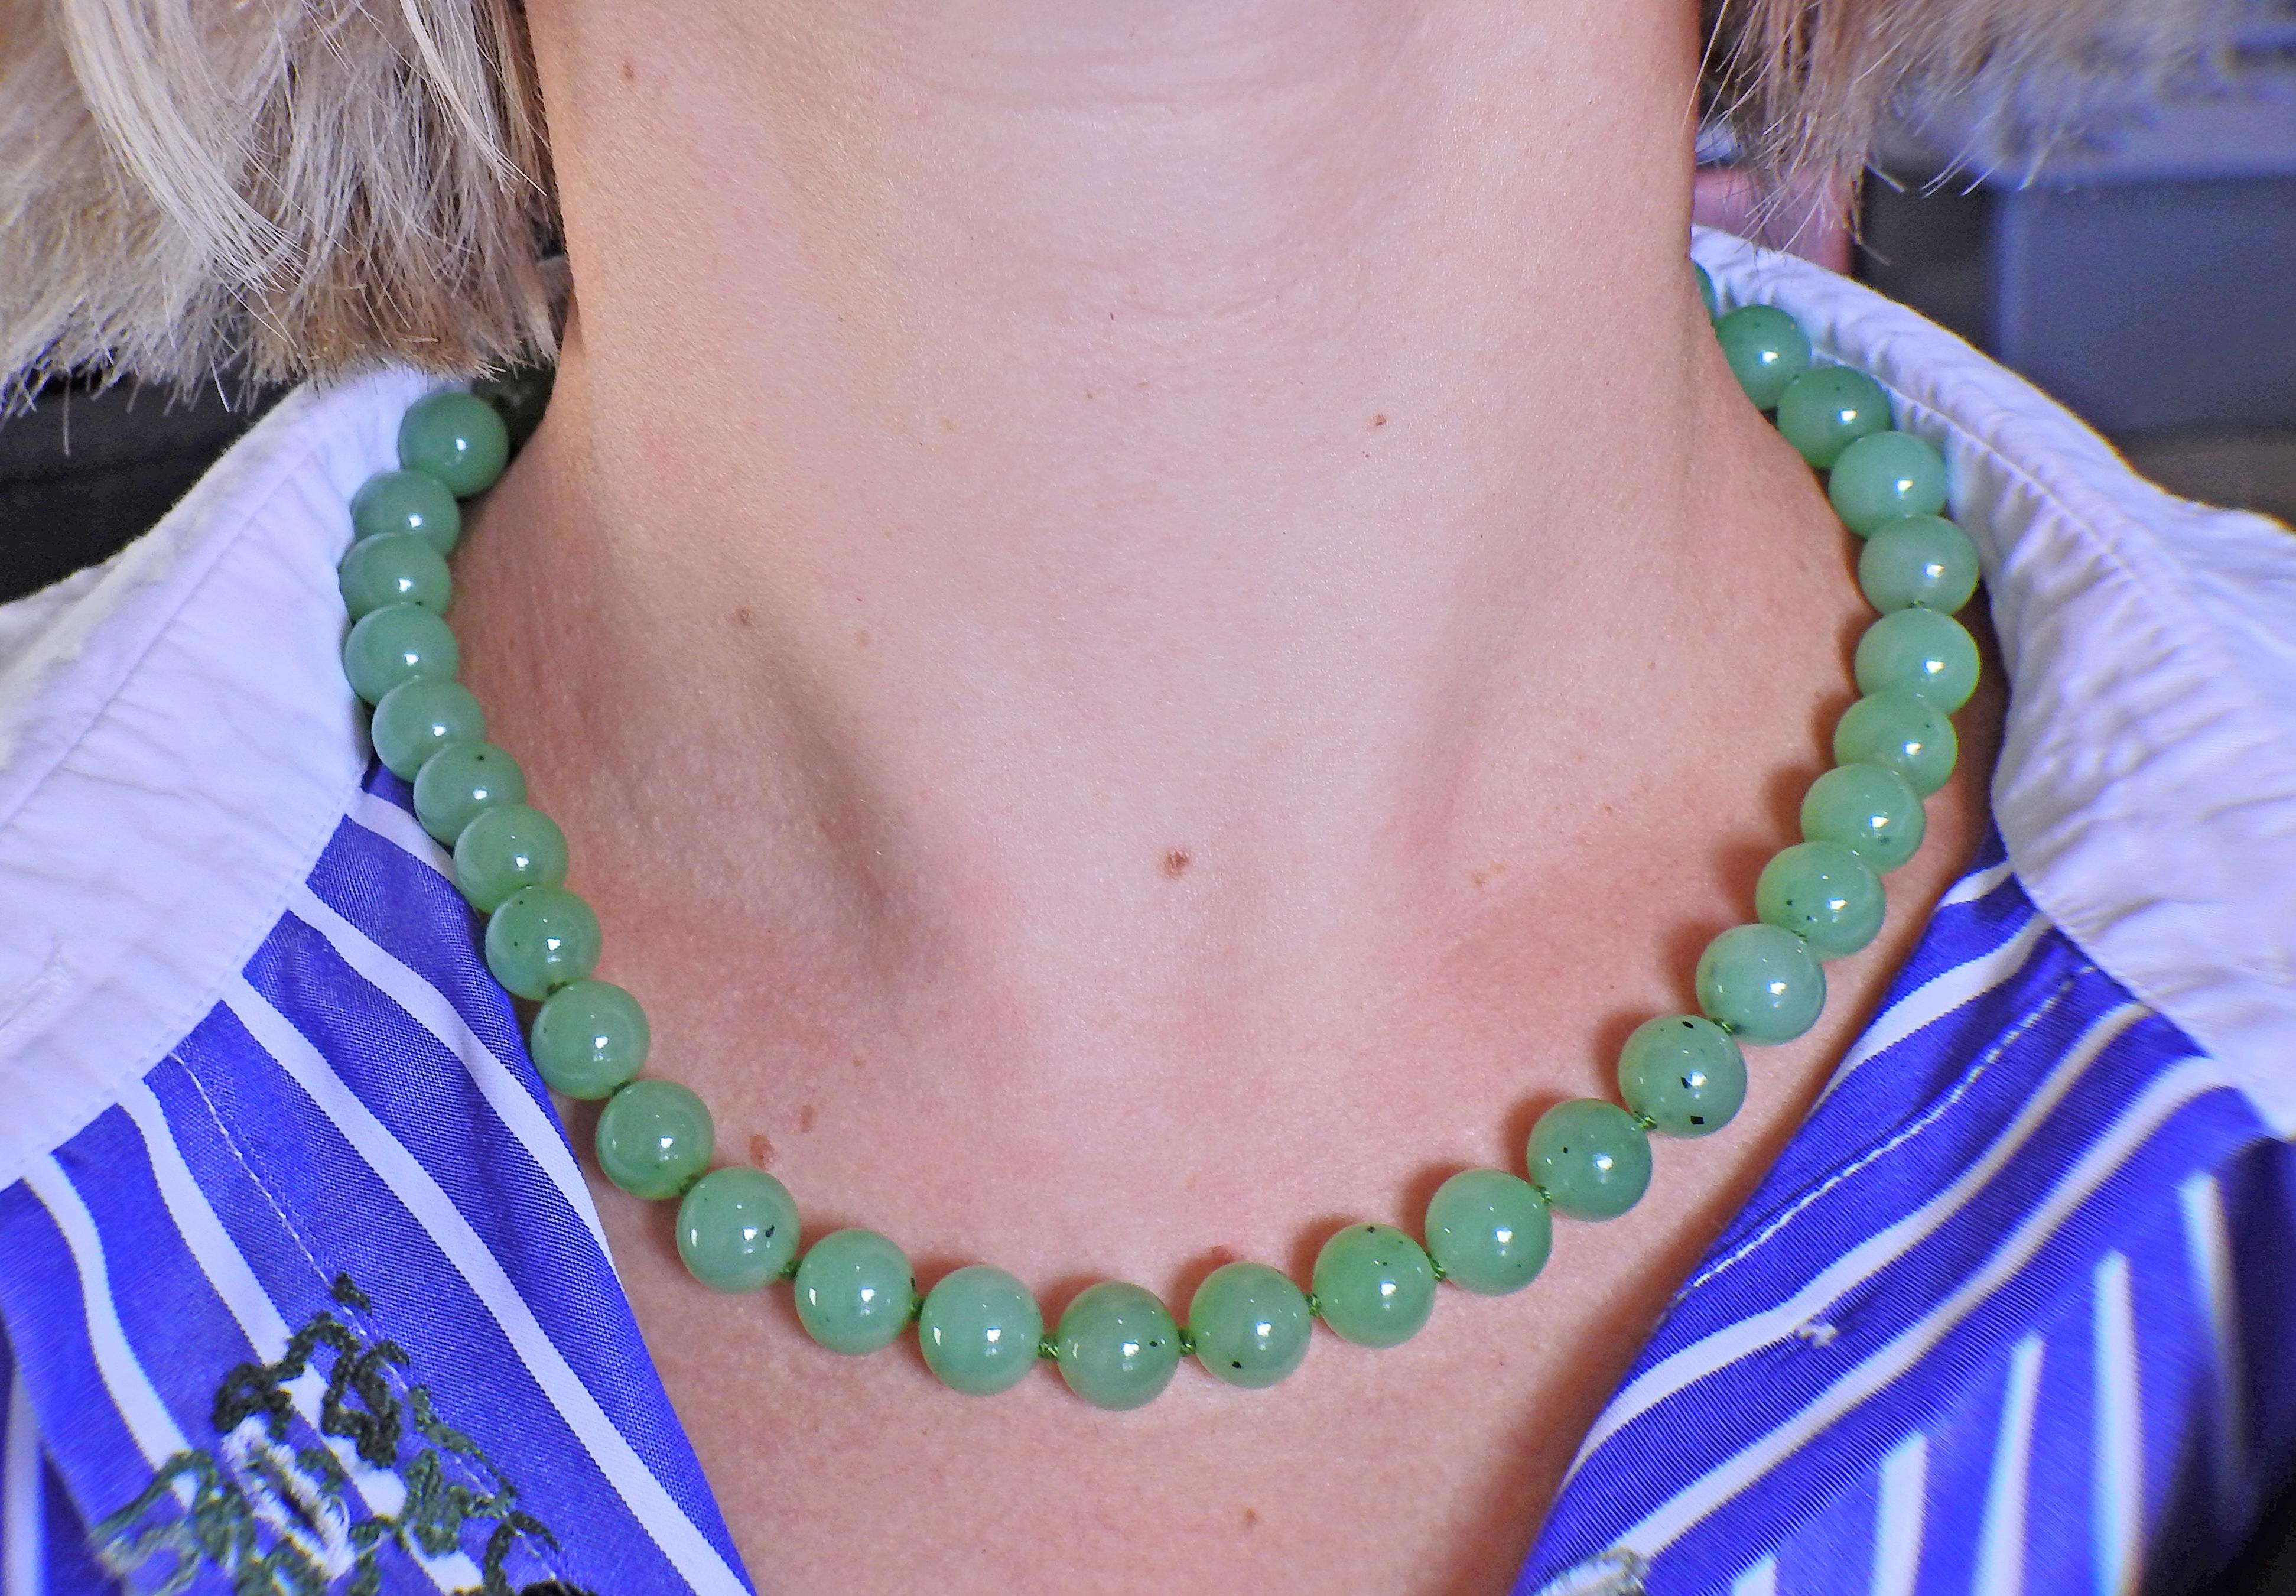 jade beads for sale